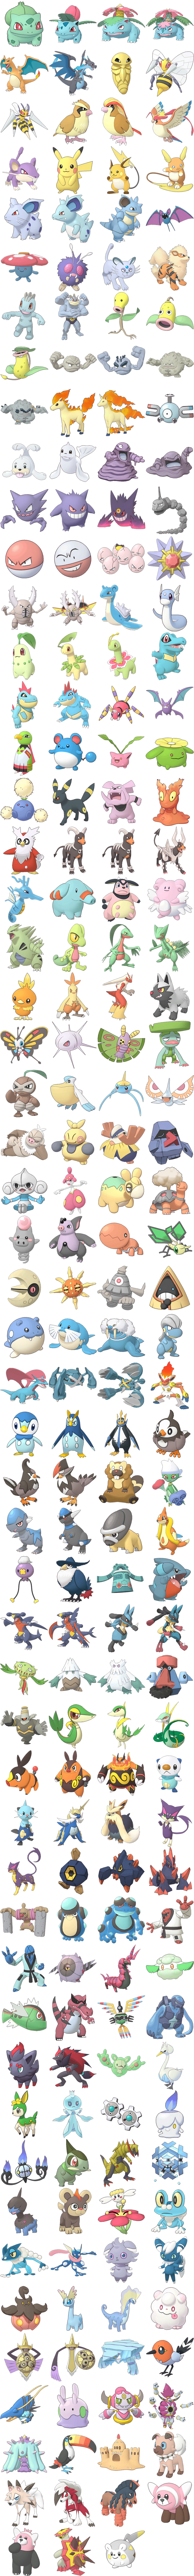 Pokémon Masters - Pokémon Icons (Large)